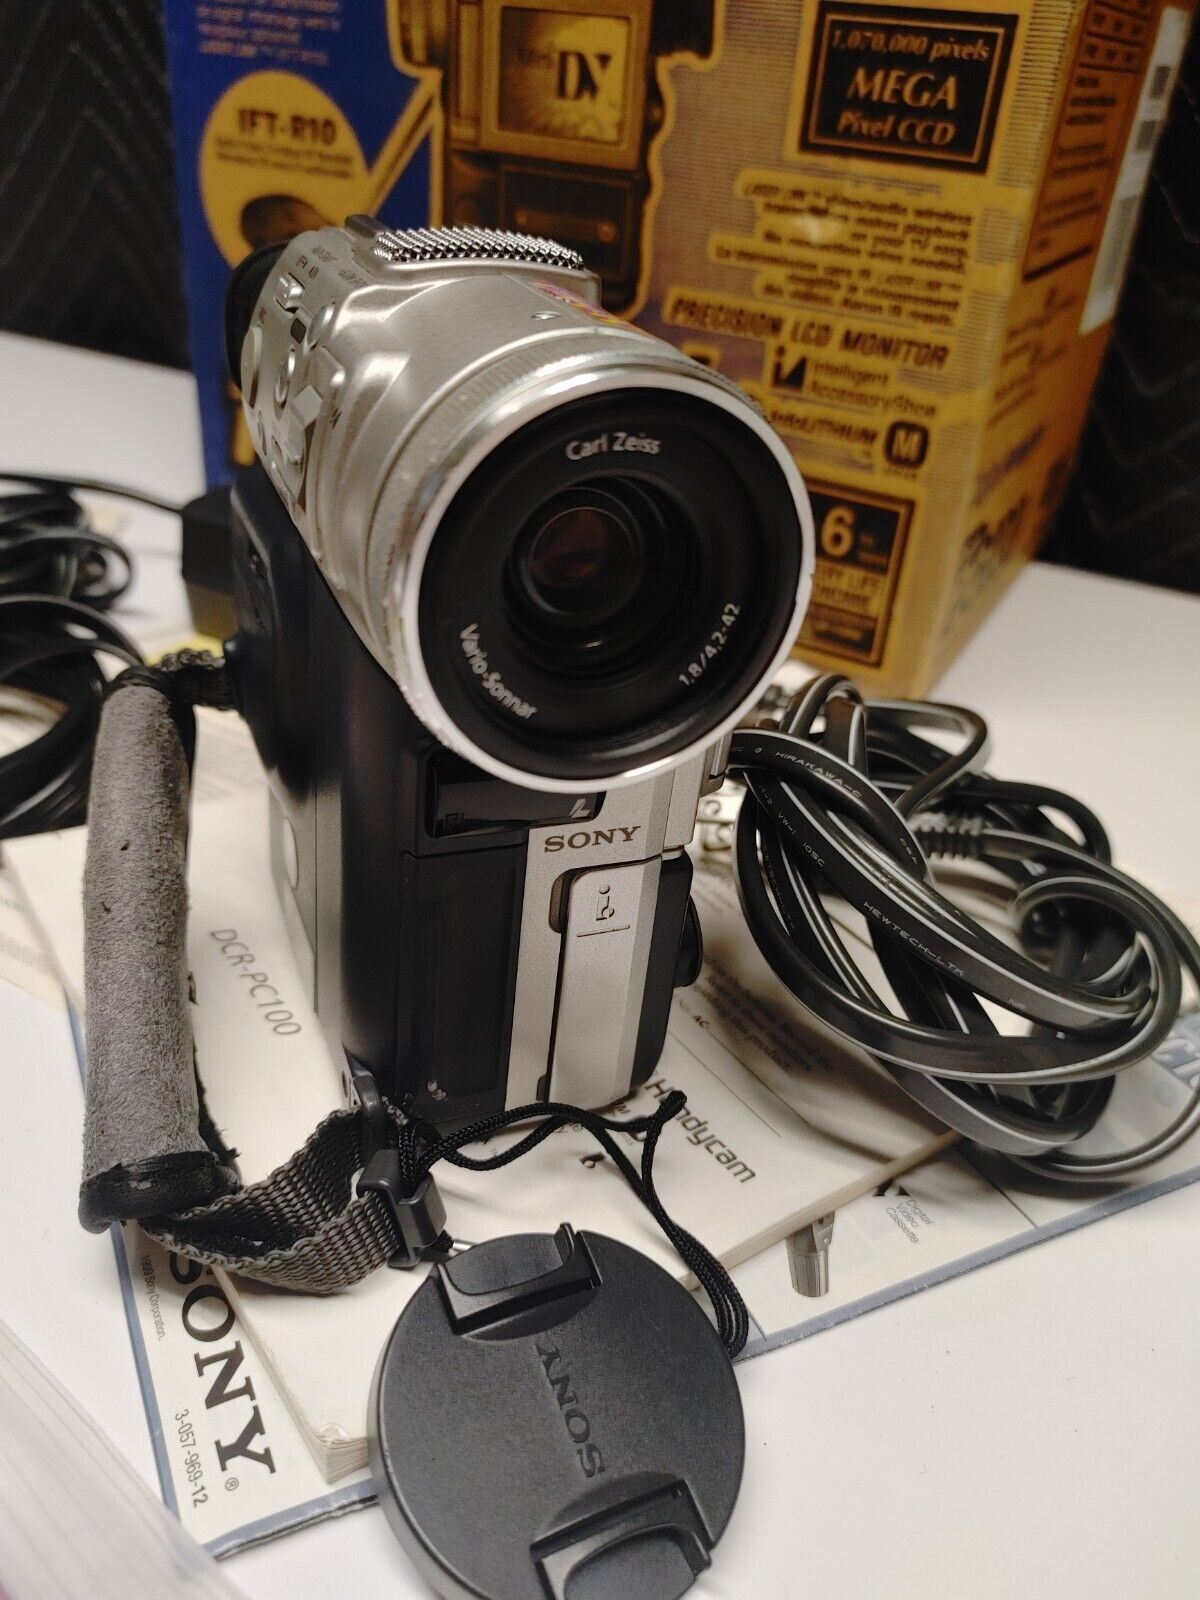 Sony Handycam DCR-PC100 Mini DV MiniDV Camcorder VCR Watch Play Video Transfer